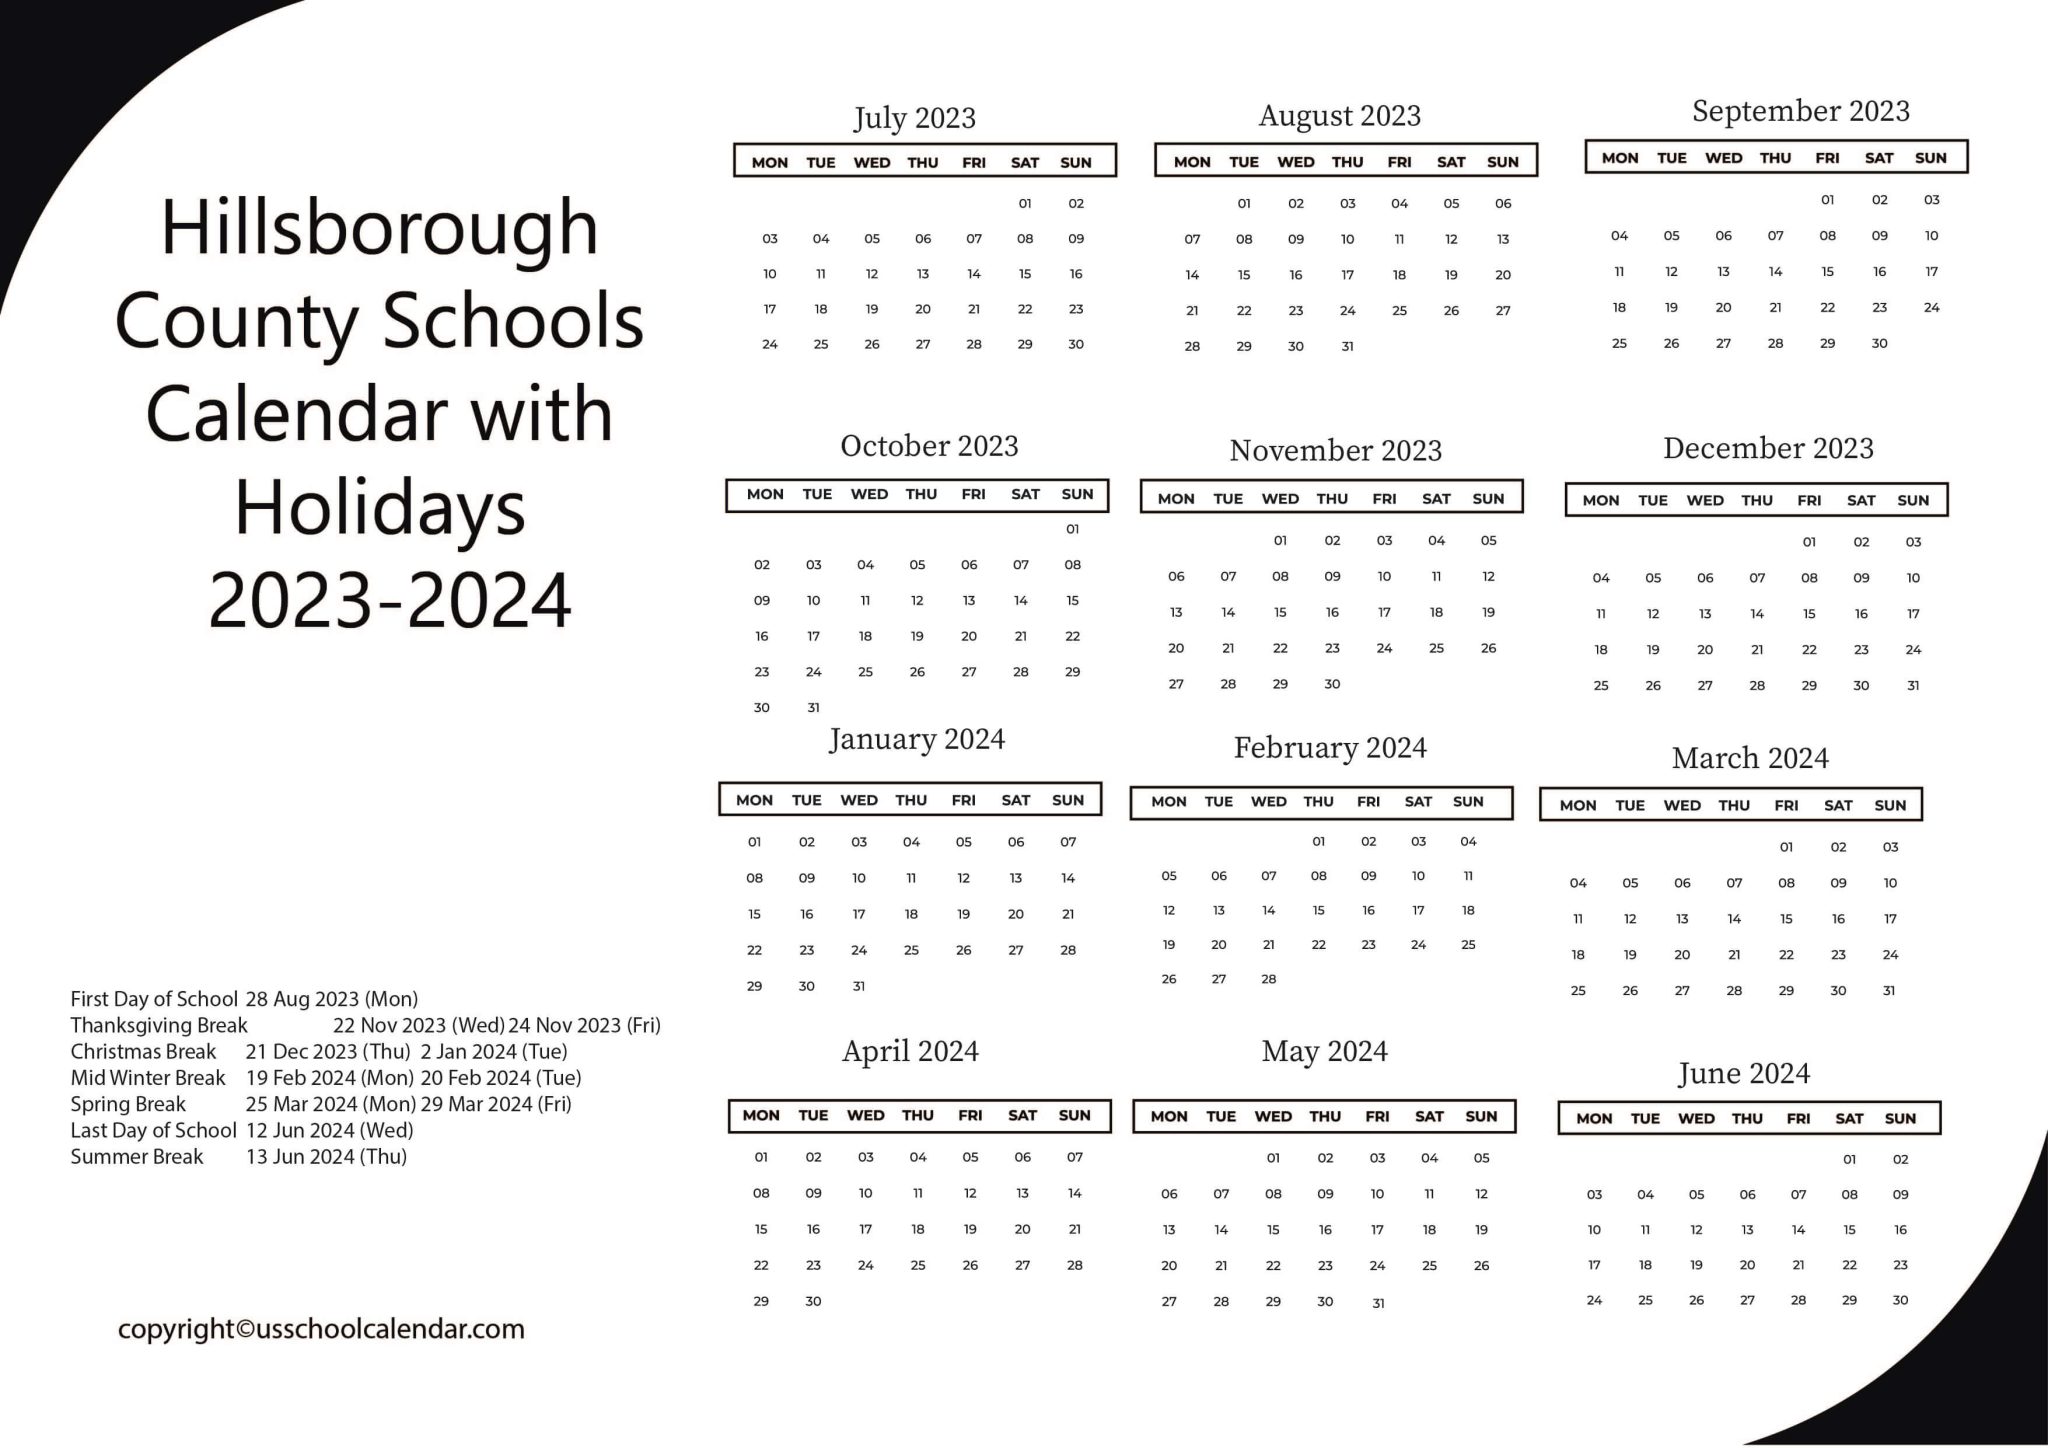  WCPSS Wake County School Calendar With Holidays 2023 2024